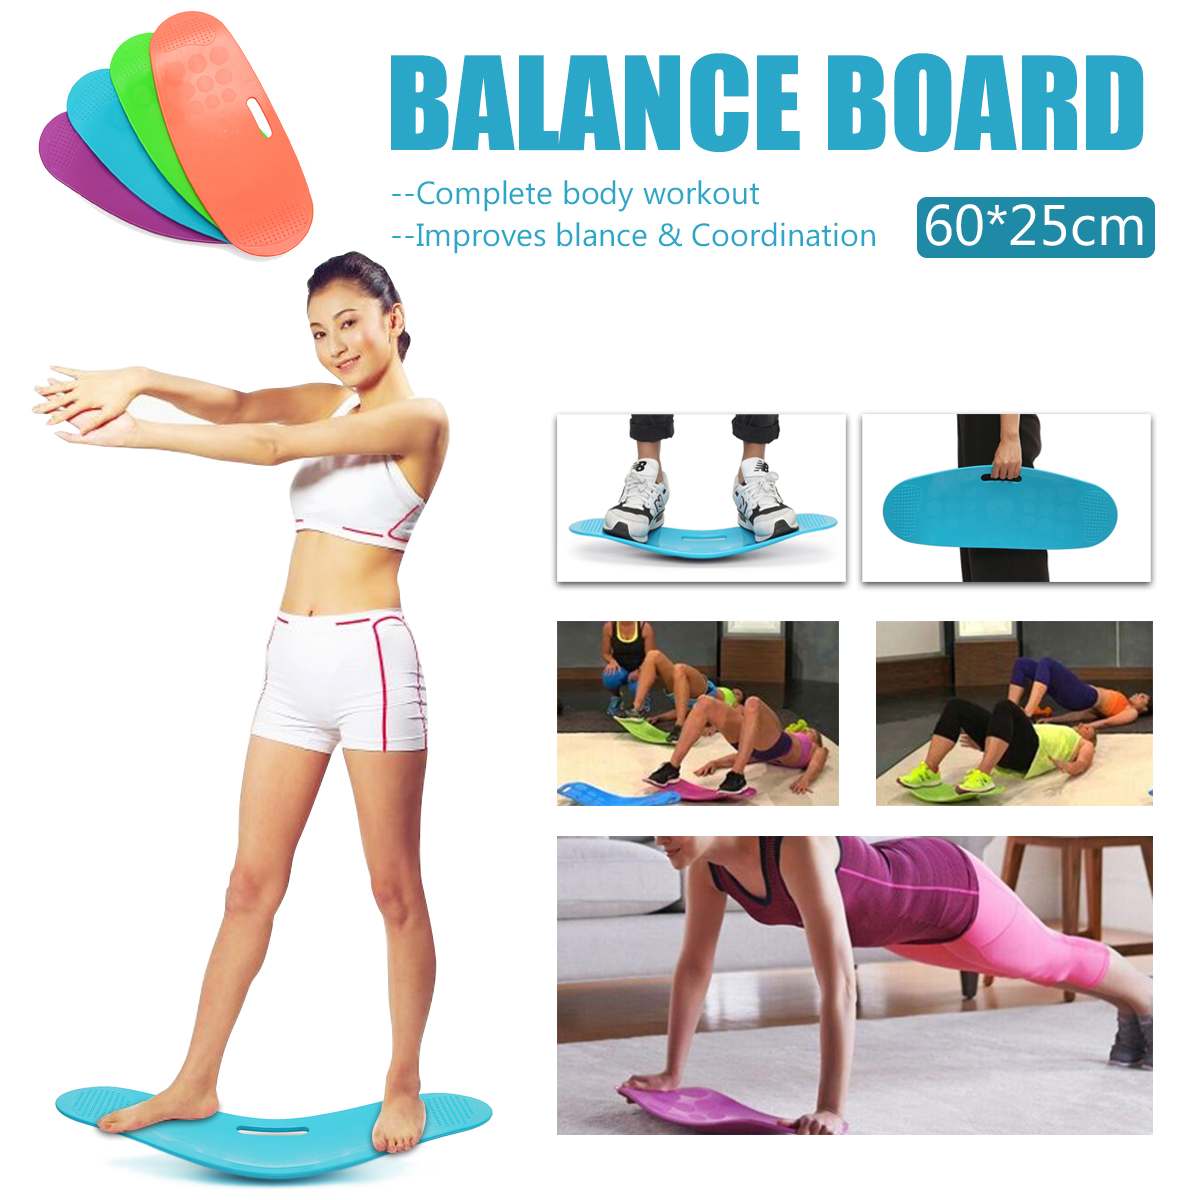 Twisting Fitness Balance Board Simple Core Workout Yoga Gym Fitness Training Prancha Abdominal Leg Training Balance Exercise